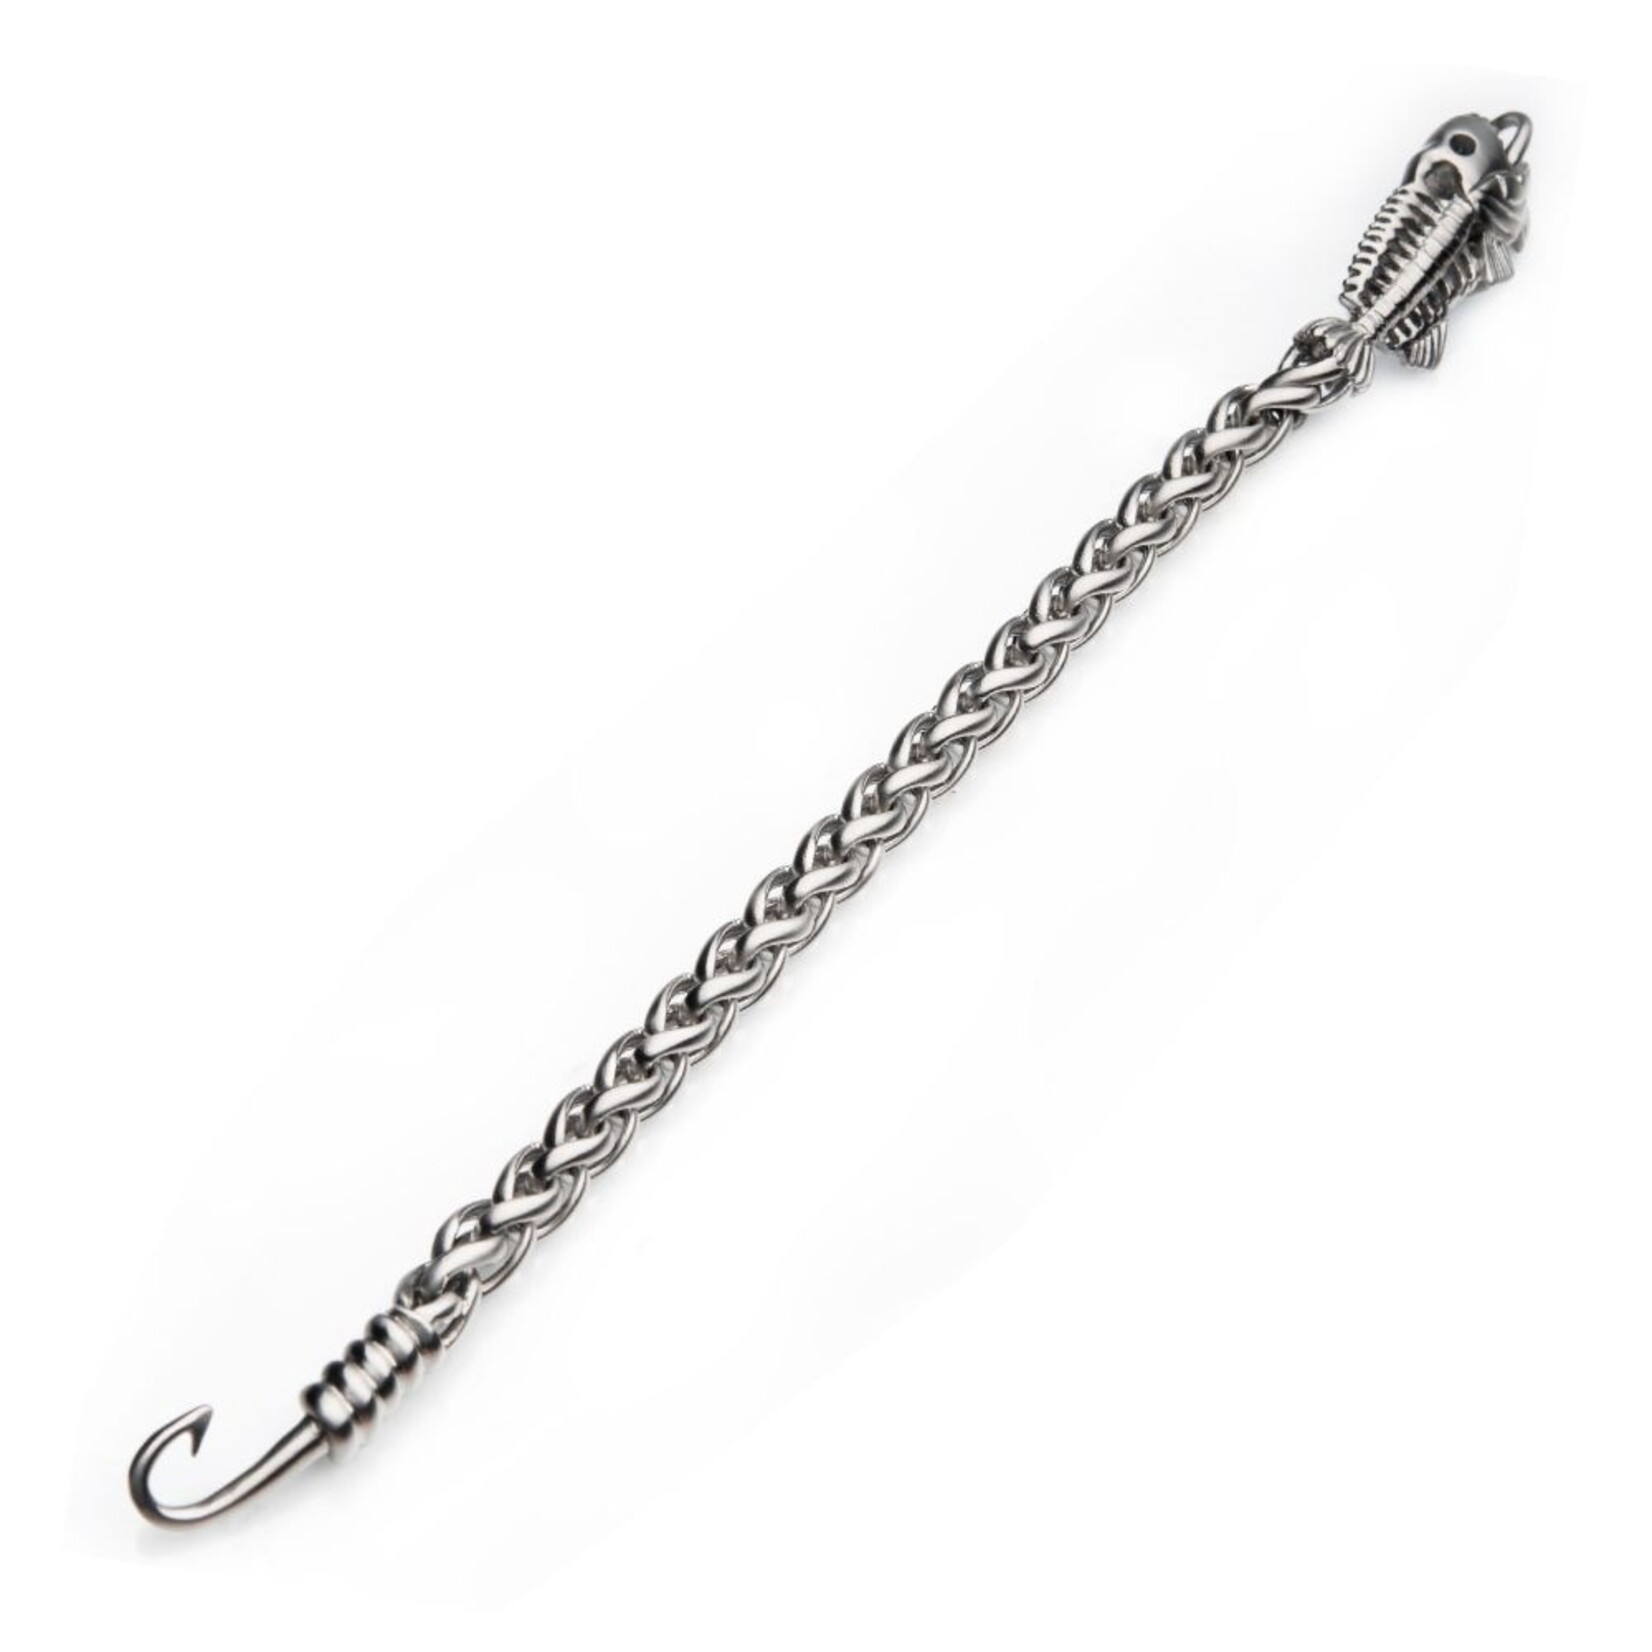 Inox Polished Steel Wheat Chain with Fishbone on Hook Clasp Bracelet - 8.5 inch